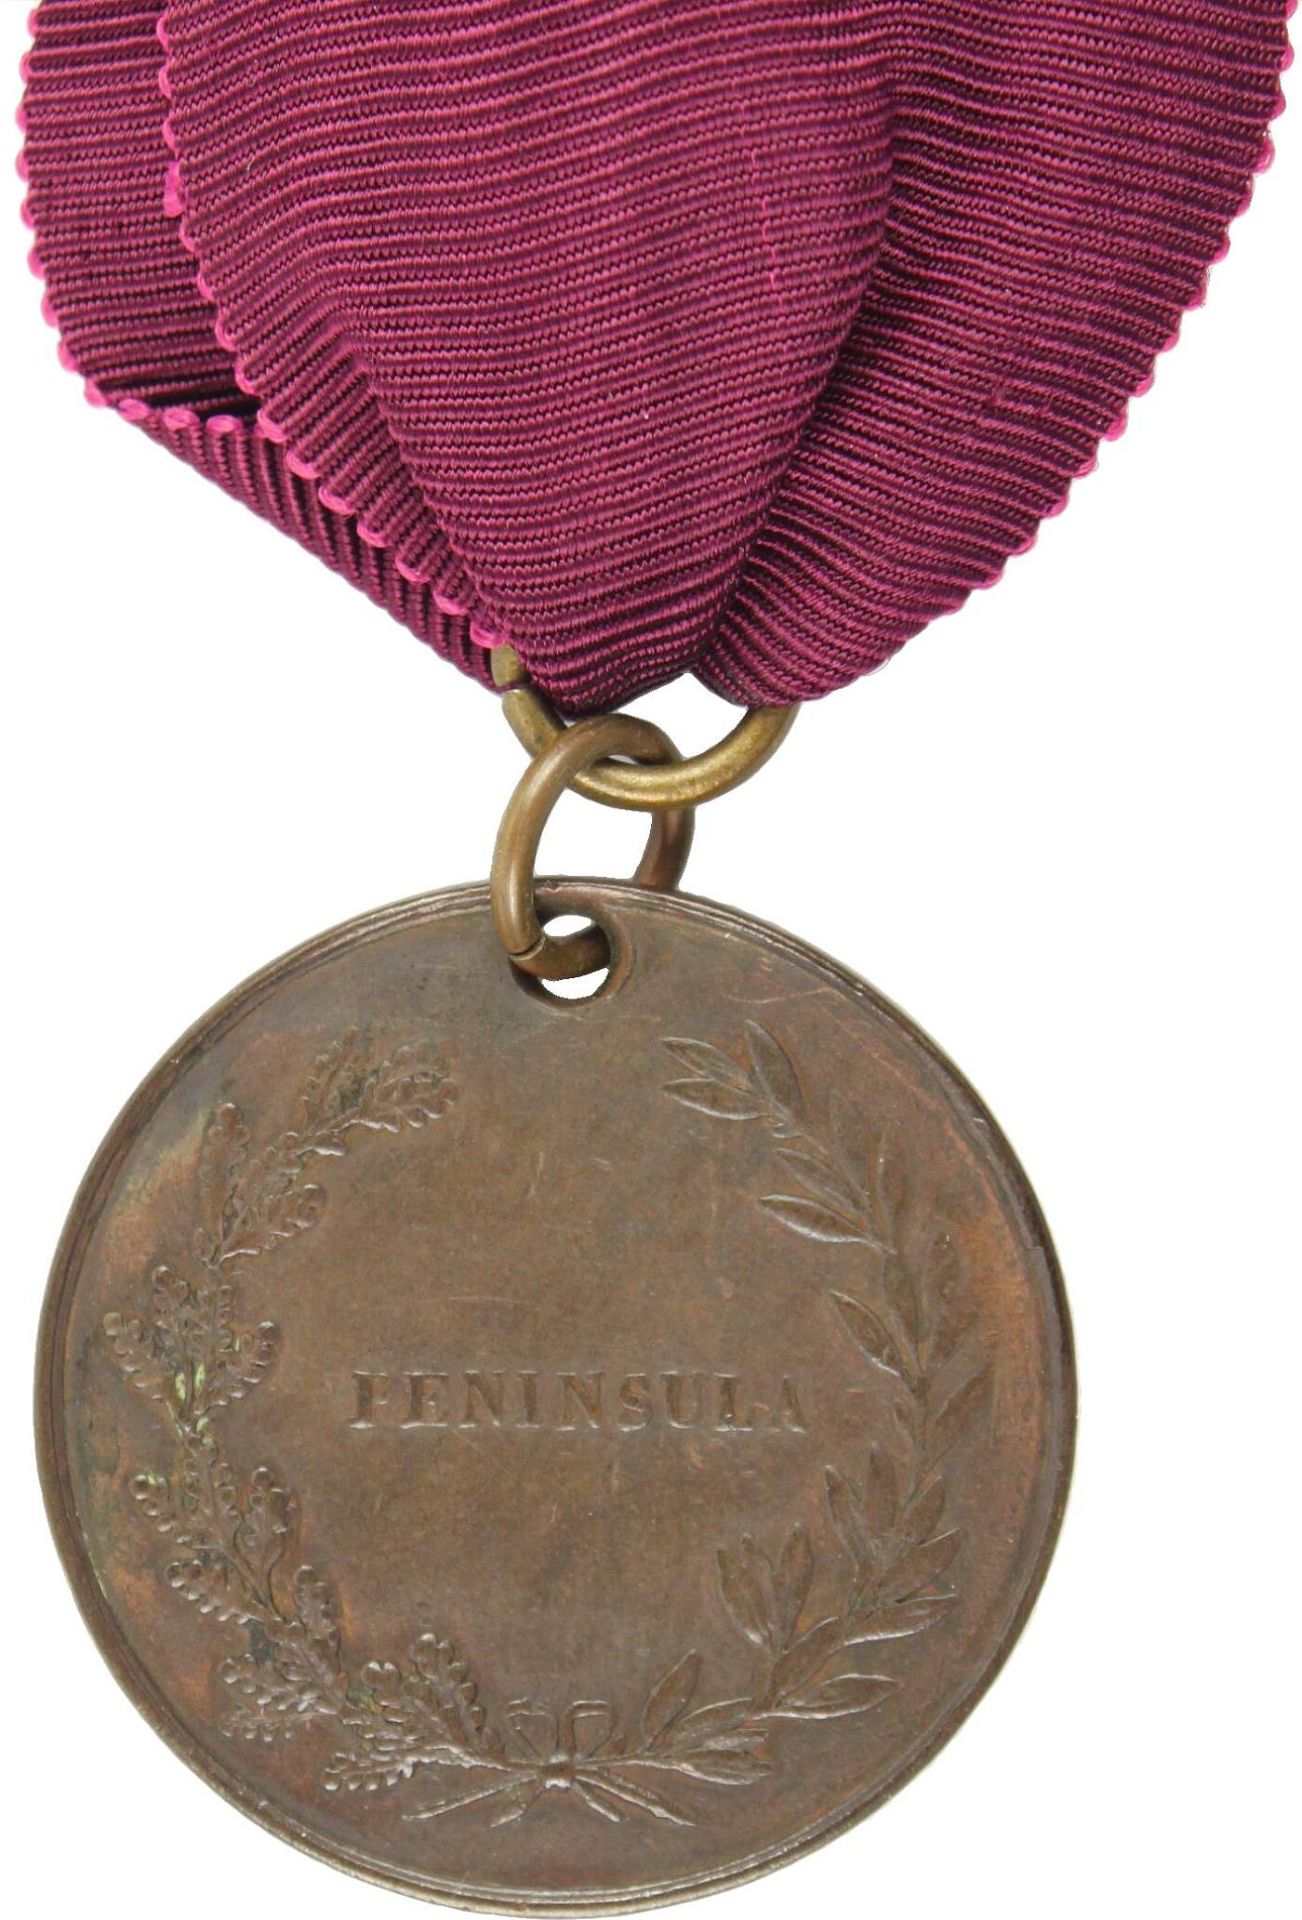 Bronzene Peninsula-Medaille